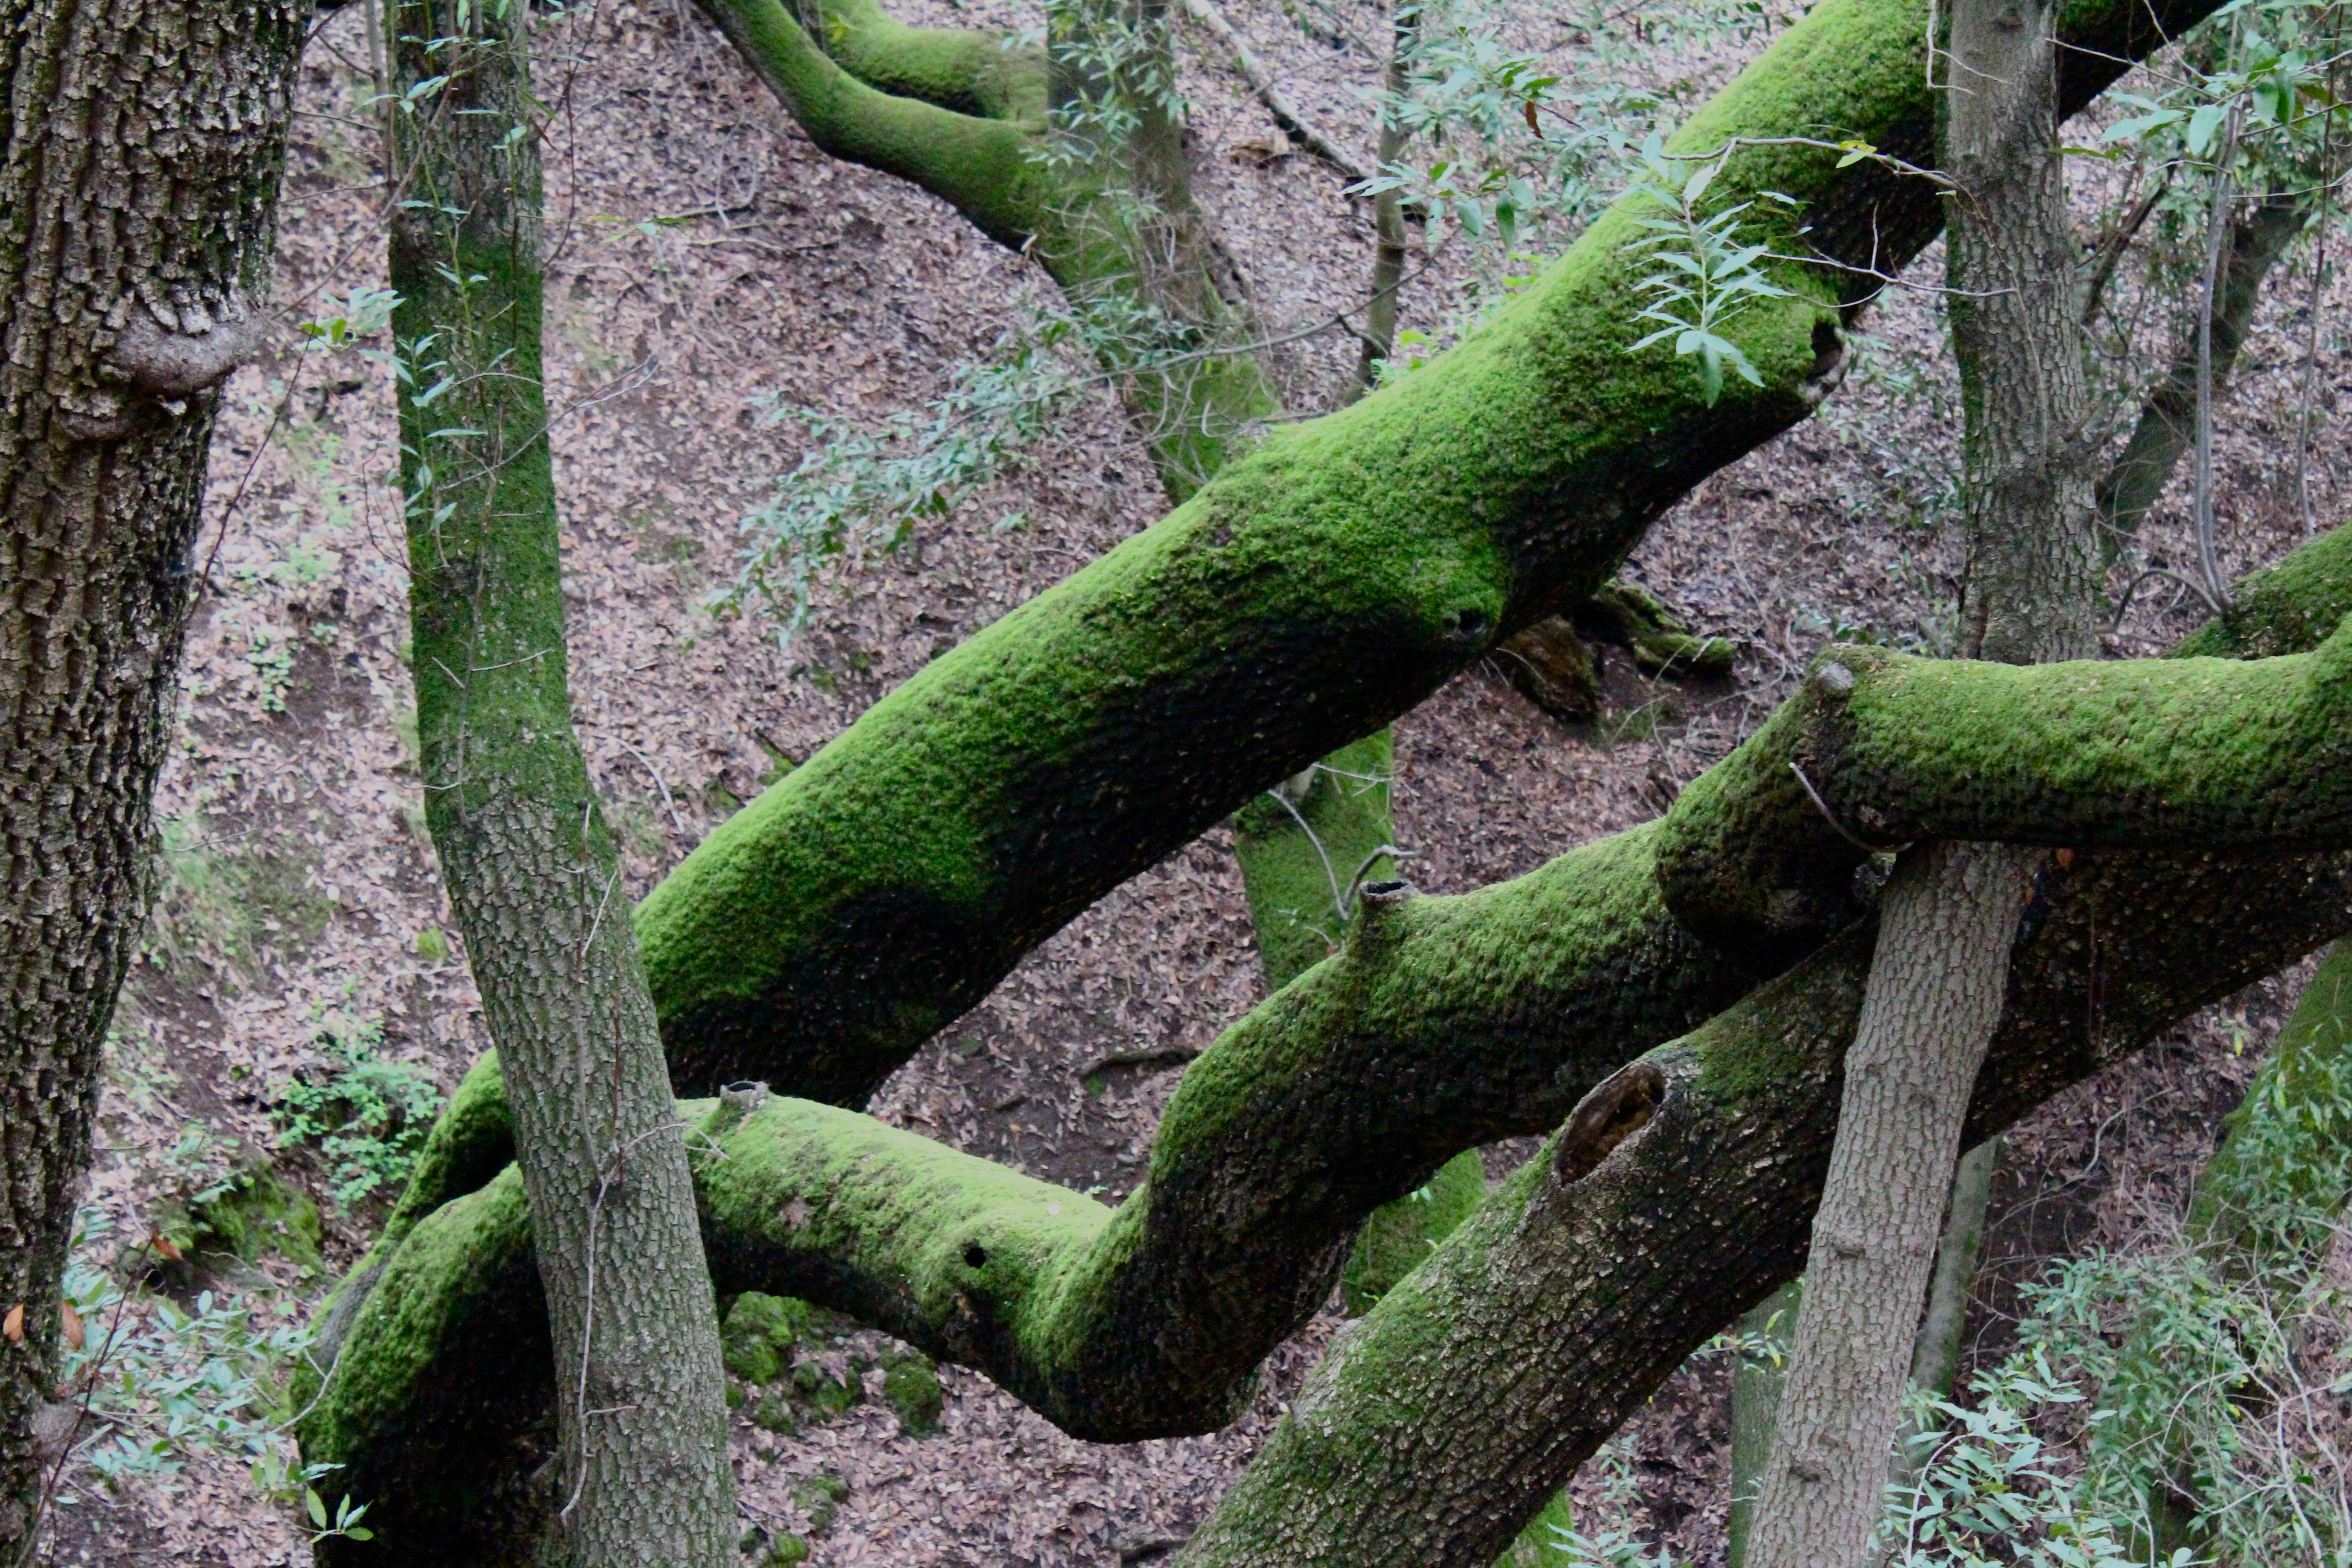 File:Green tree moss.jpg - Wikimedia Commons